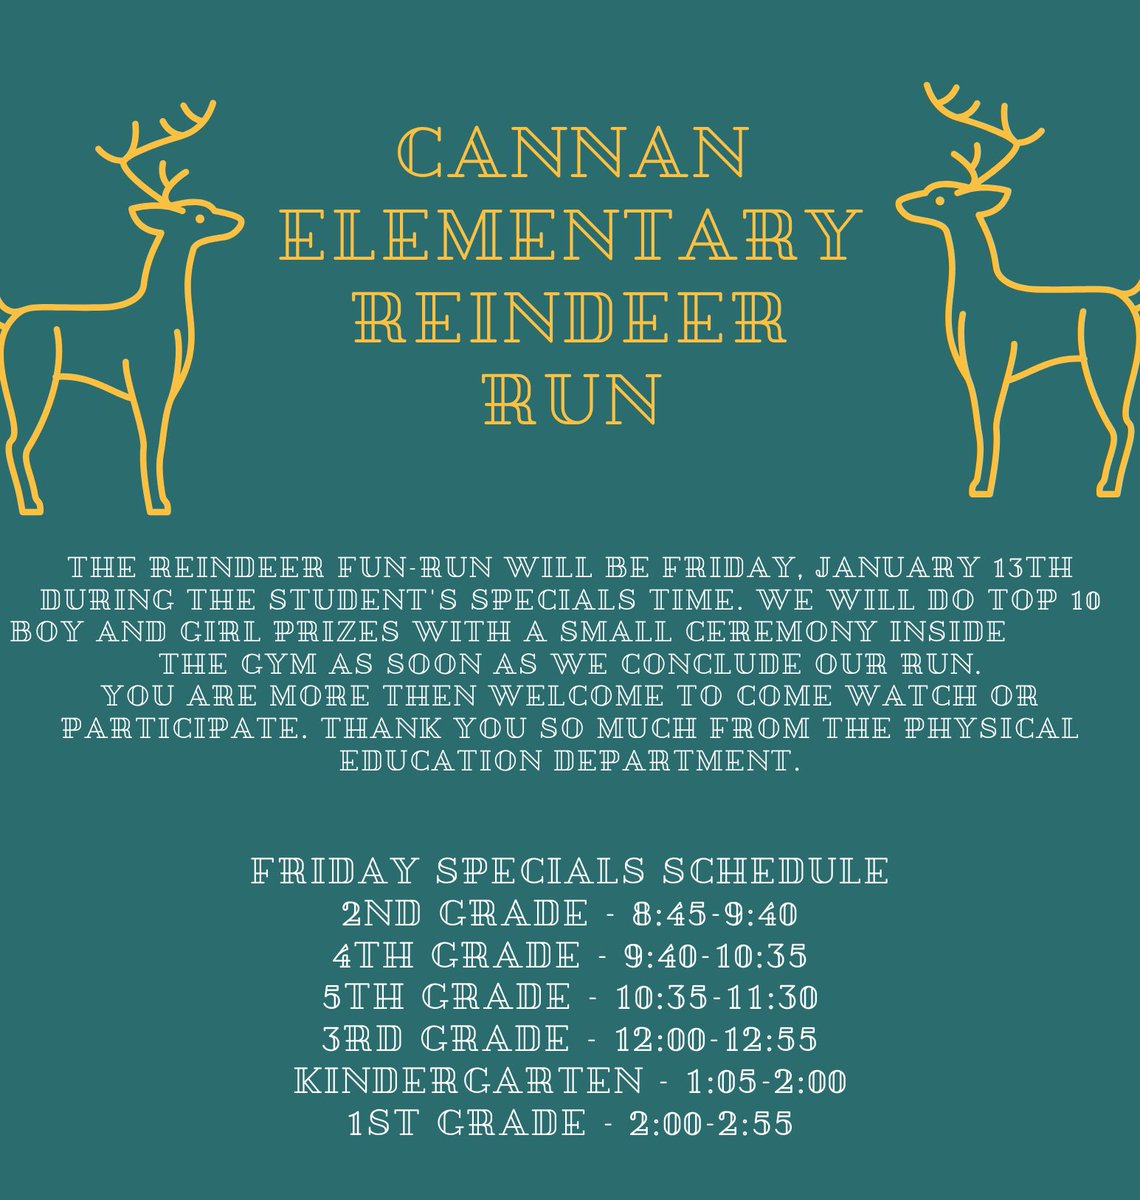 Hope to see you at the @WISDCannan Reindeer Run next Friday!🦌
•
#specials #team #pe #music #reindeerrun #willis #active #healthy #fun #schooliscool #friday #january